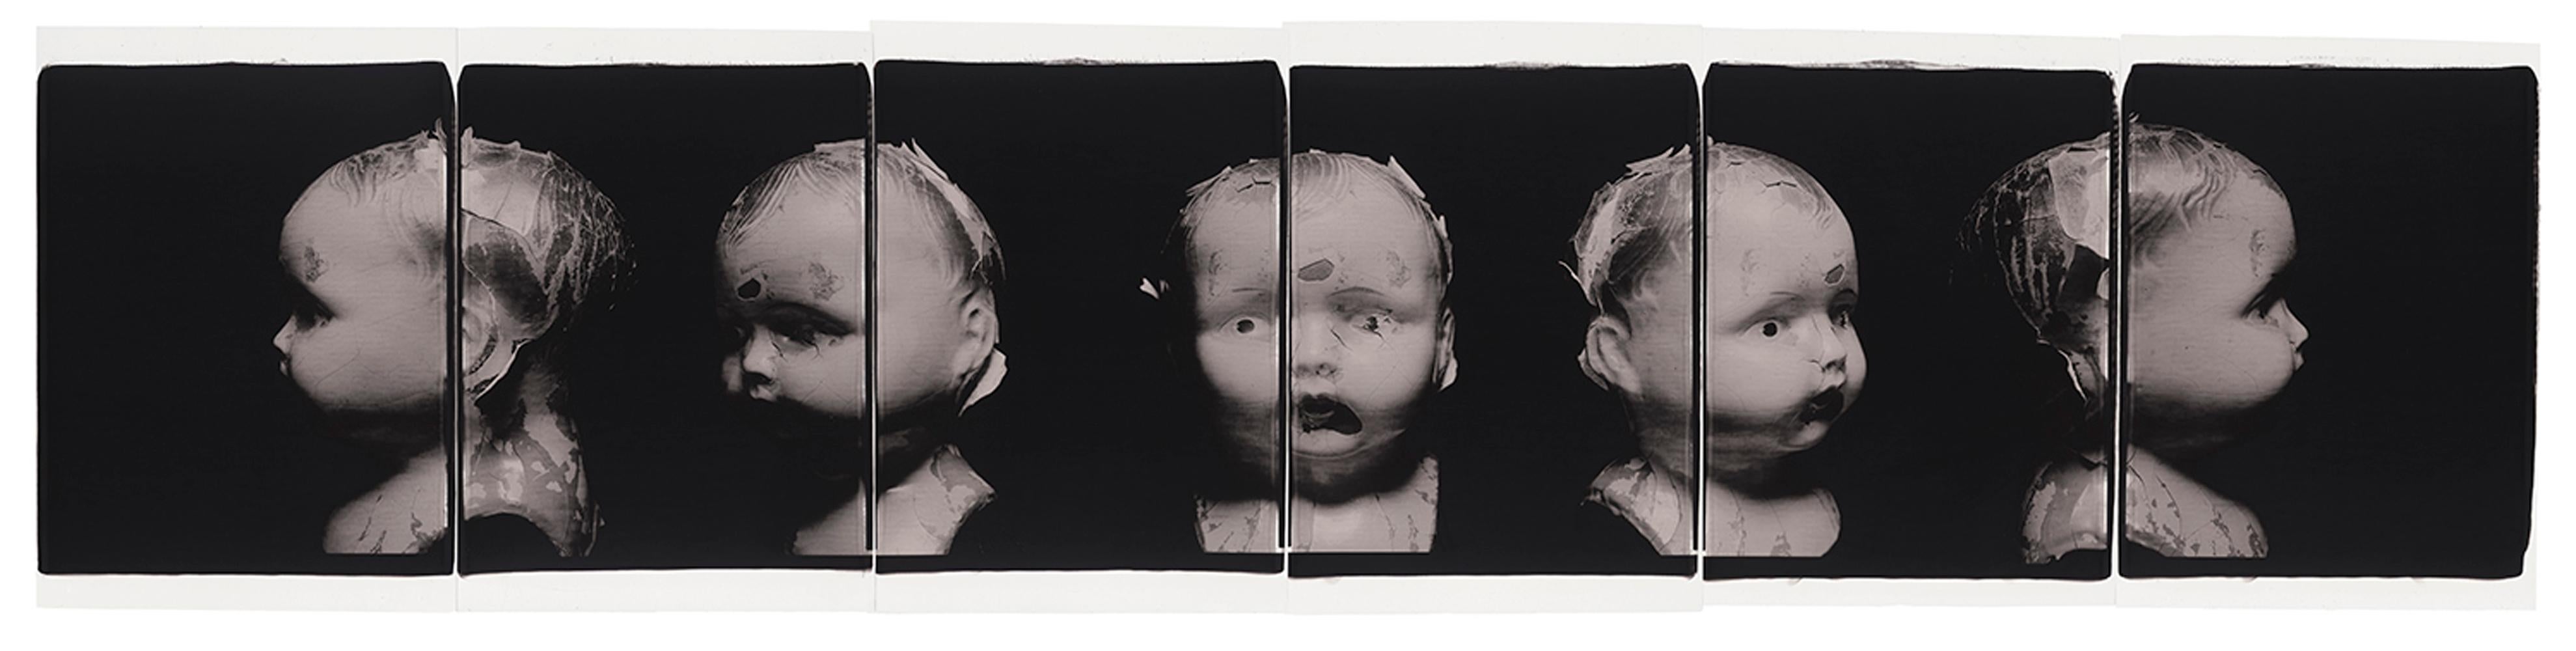 Black and White Photograph Jose Picayo - « Road Head », New York, NY, 1997